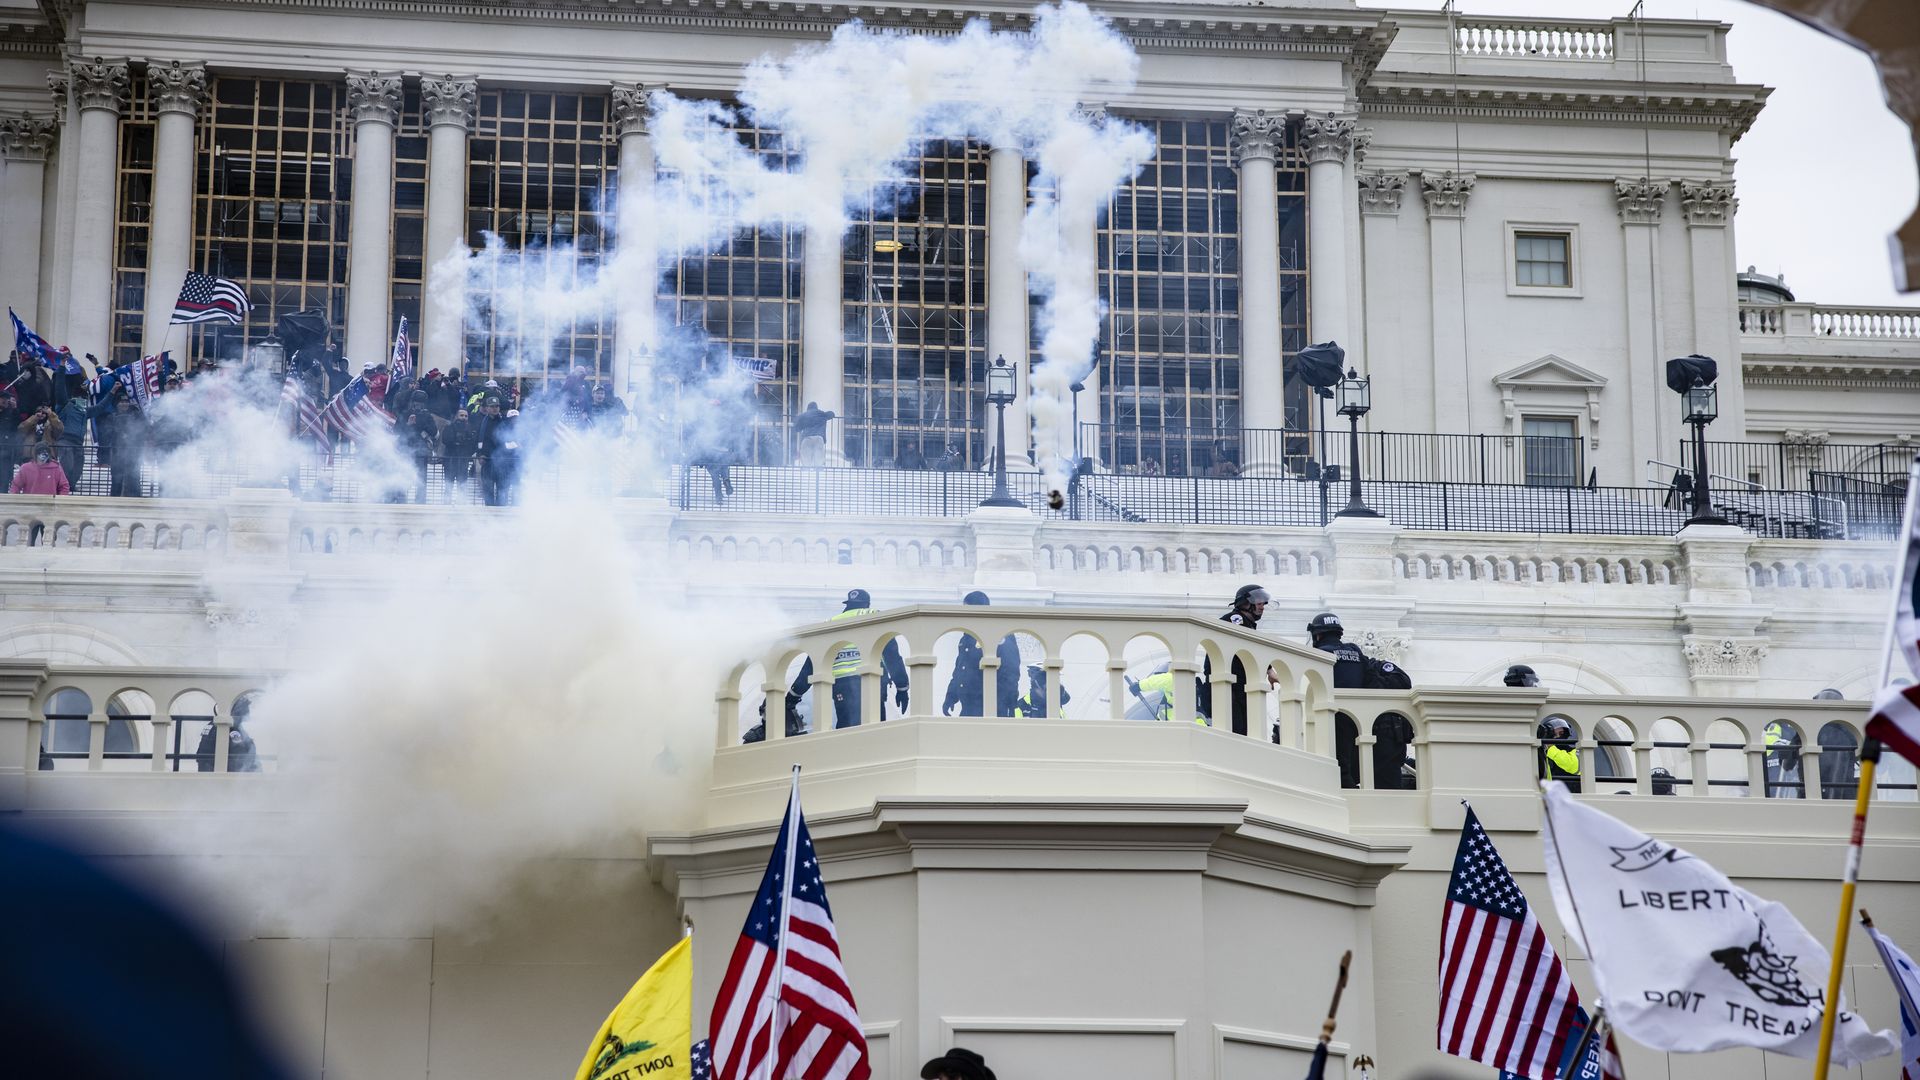 Chaos and mayhem at the US Capitol last January